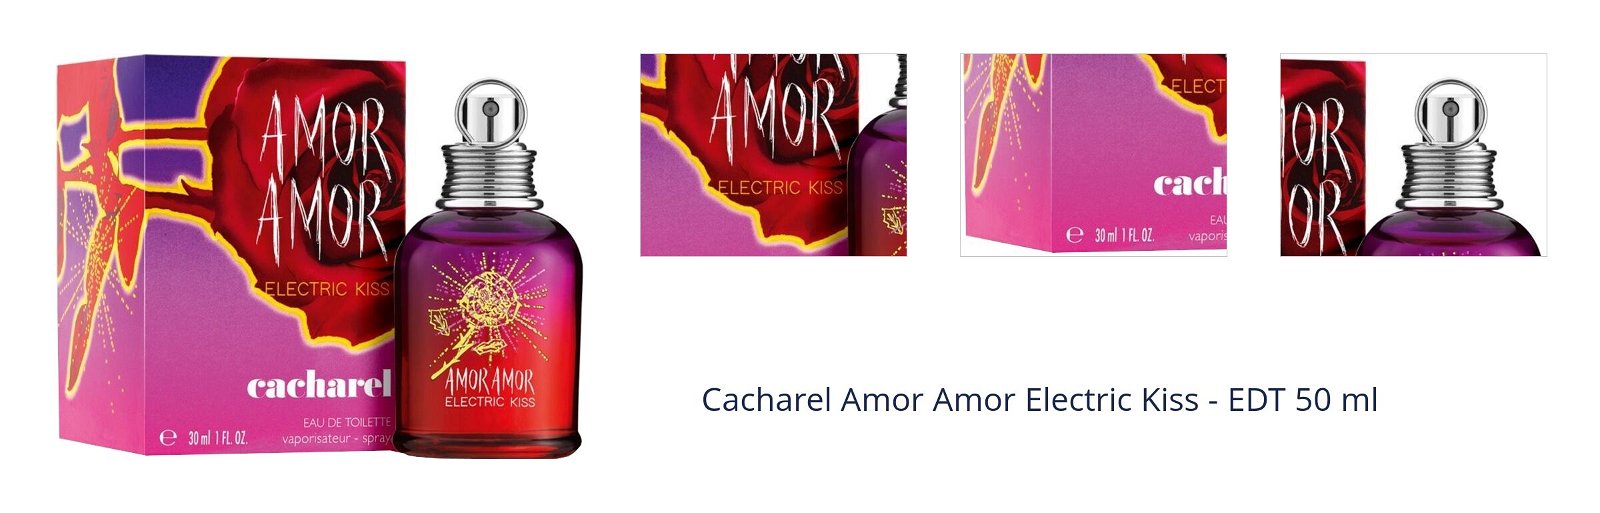 Cacharel Amor Amor Electric Kiss - EDT 50 ml 1